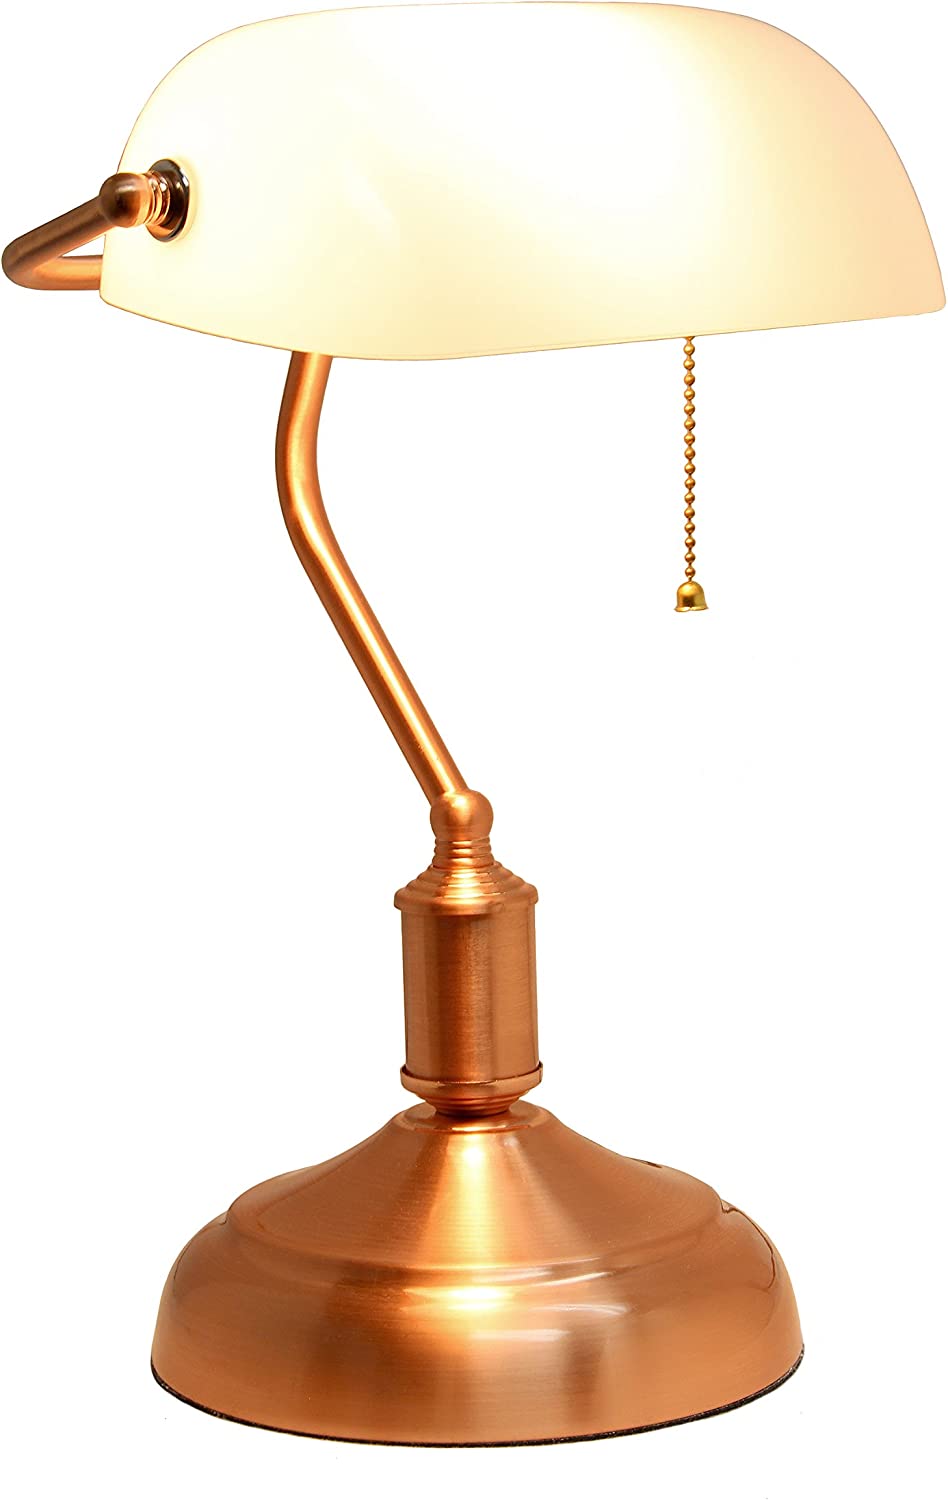 Simple Designs LT3216-RGD Executive Banker's Glass Shade, Desk Lamp, Rose Gold/White